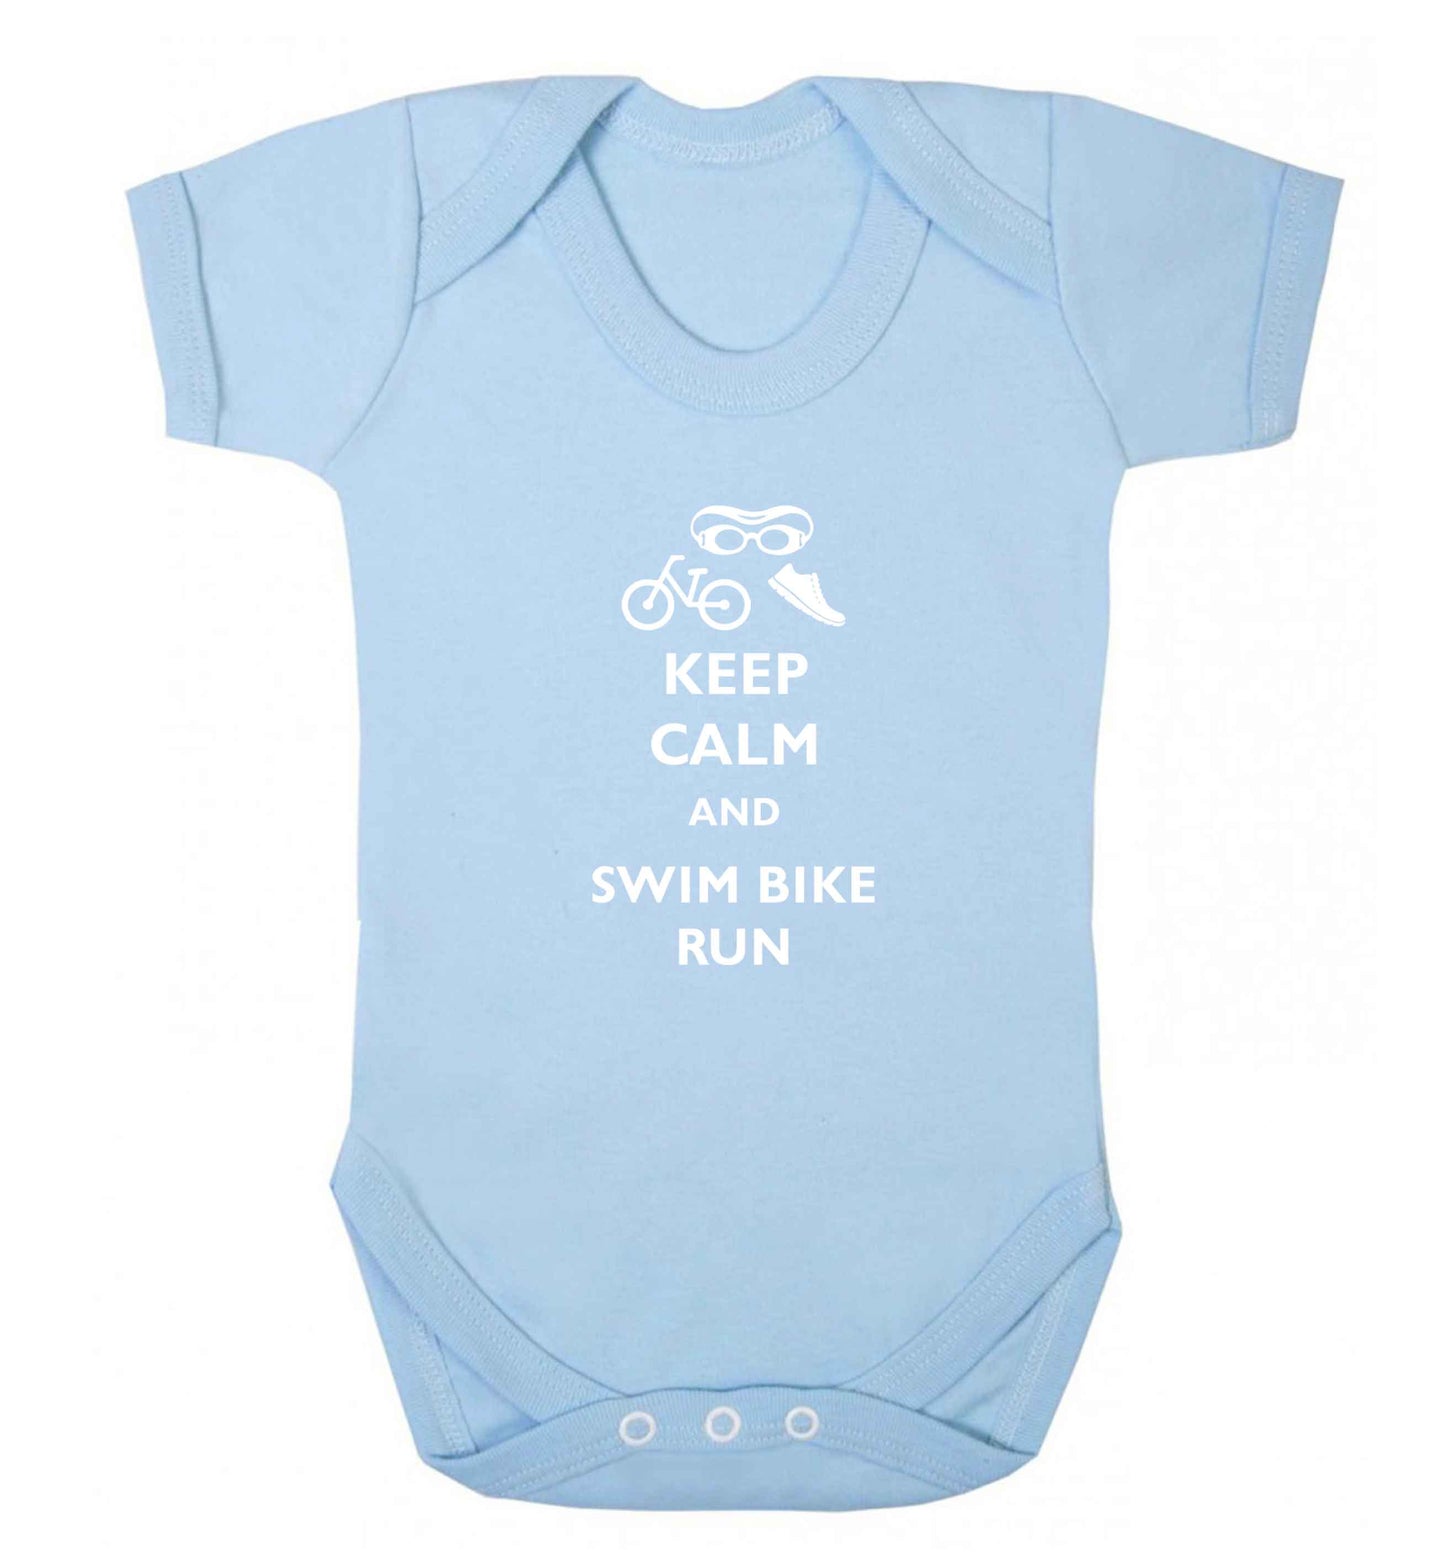 Keep calm and swim bike run baby vest pale blue 18-24 months